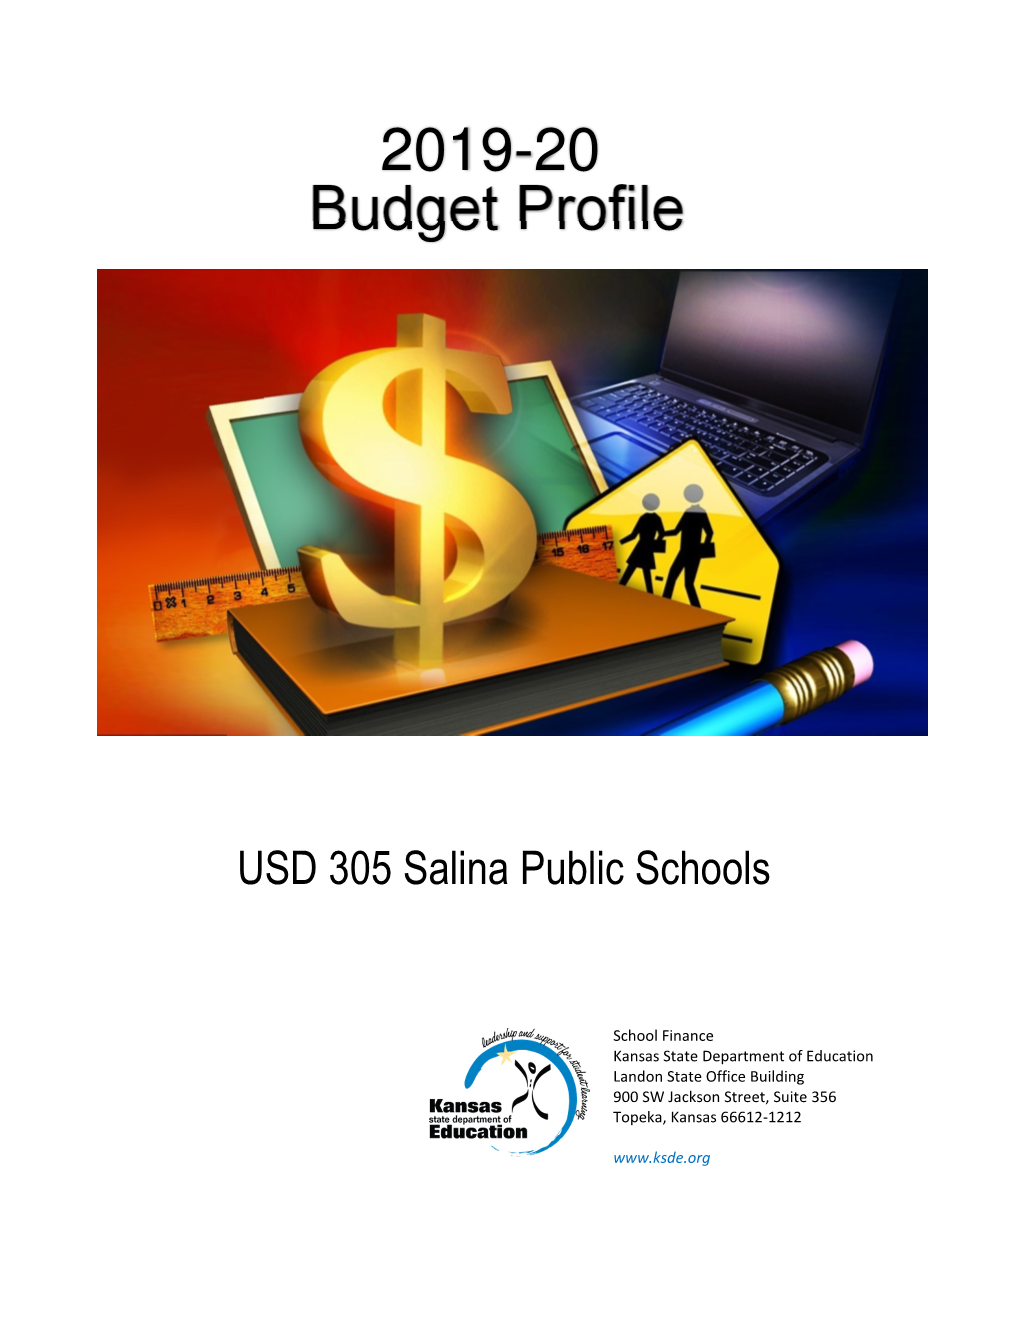 Budget Profile 2019-20